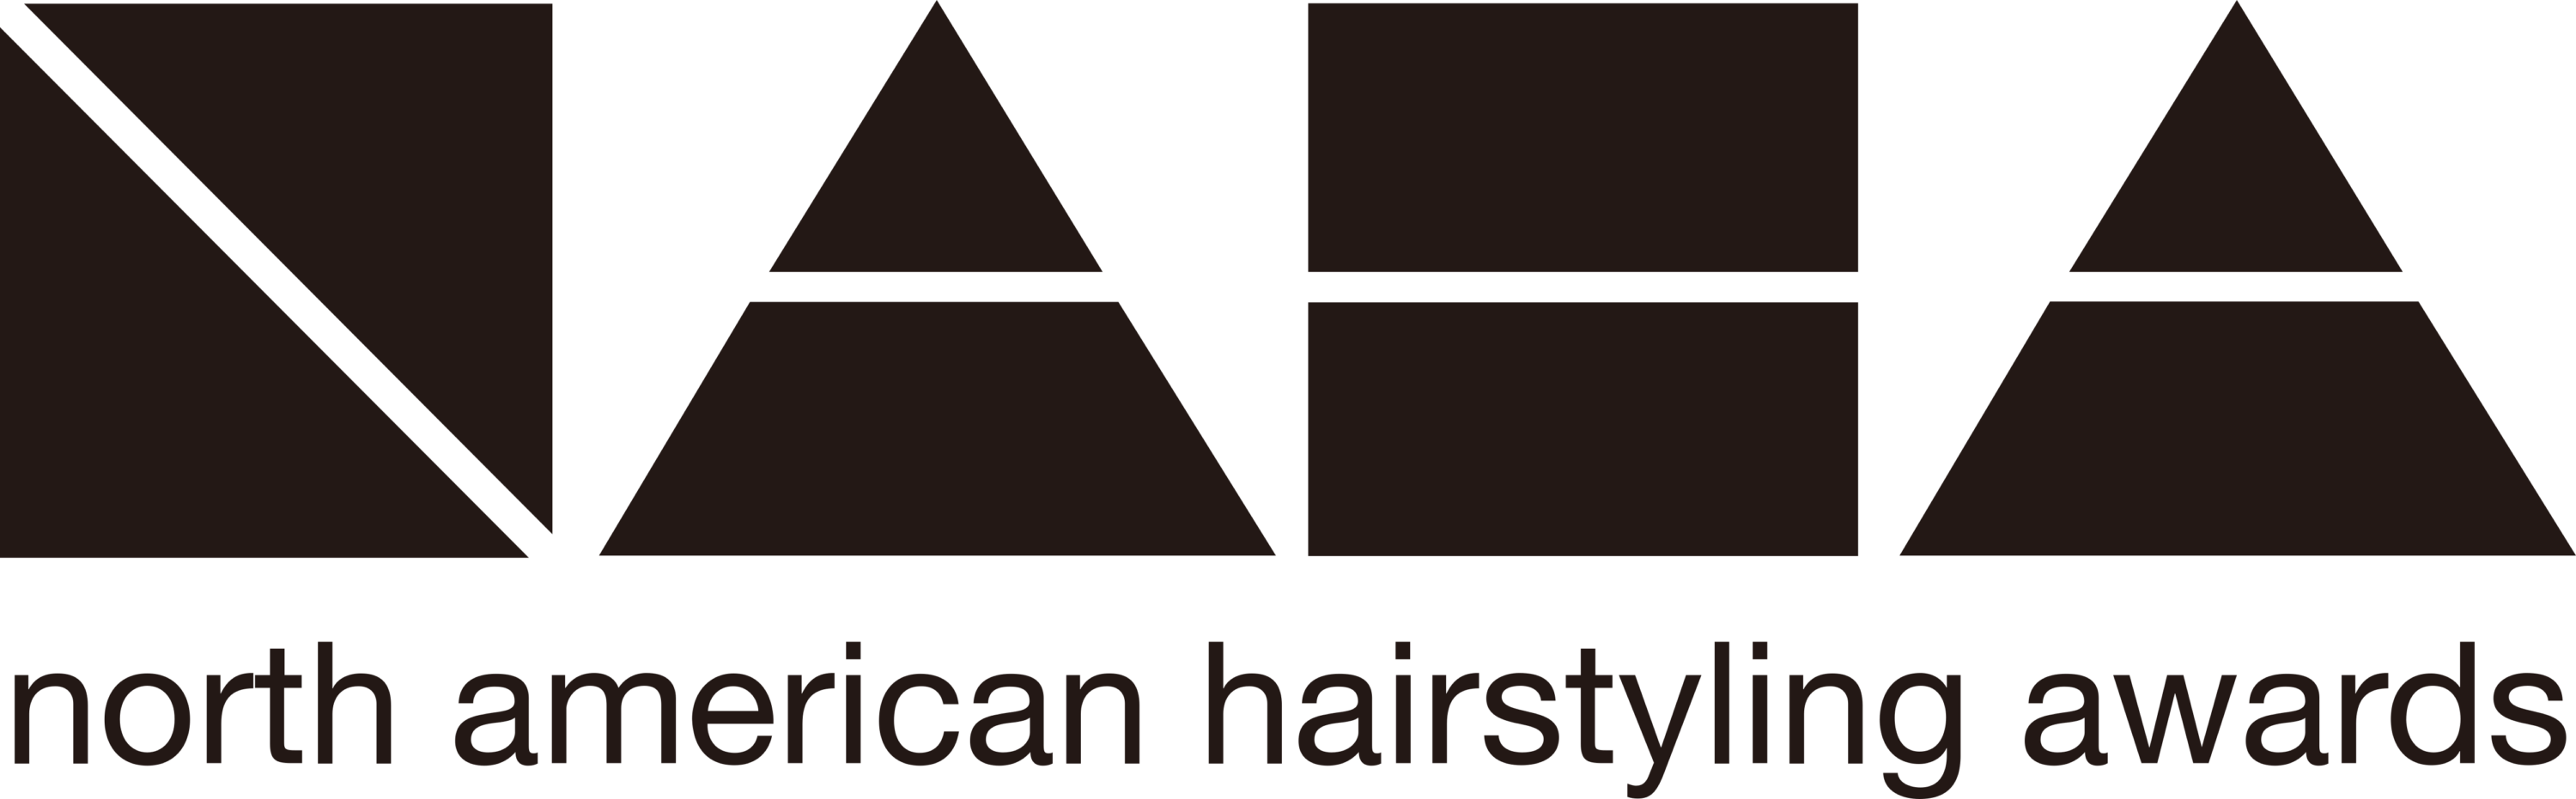 North American Hairstyling Awards Logo